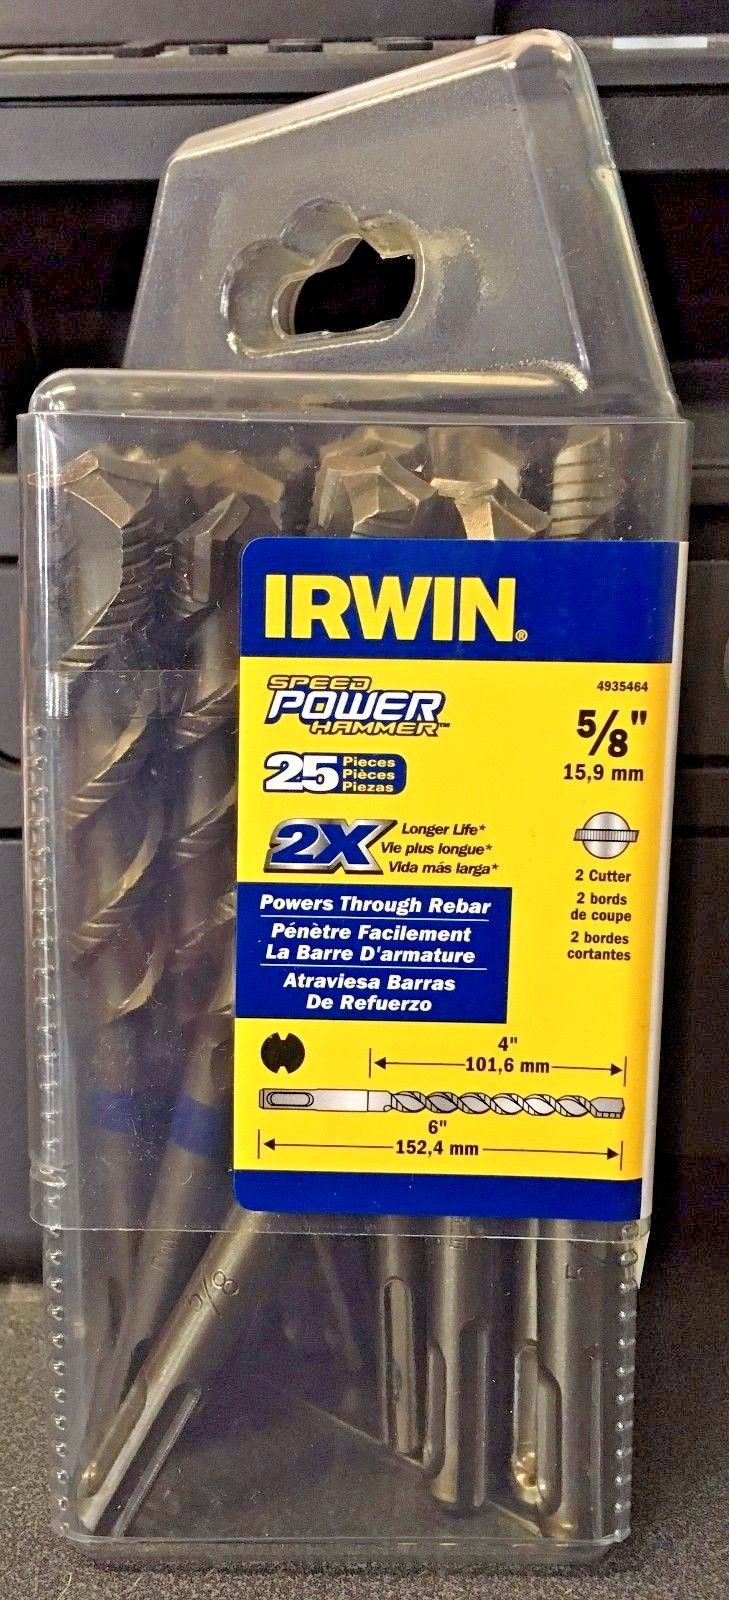 Irwin 4935464 5/8" x 4" x 6" SDS Speed Power Hammer Drill Bits 25 Pack